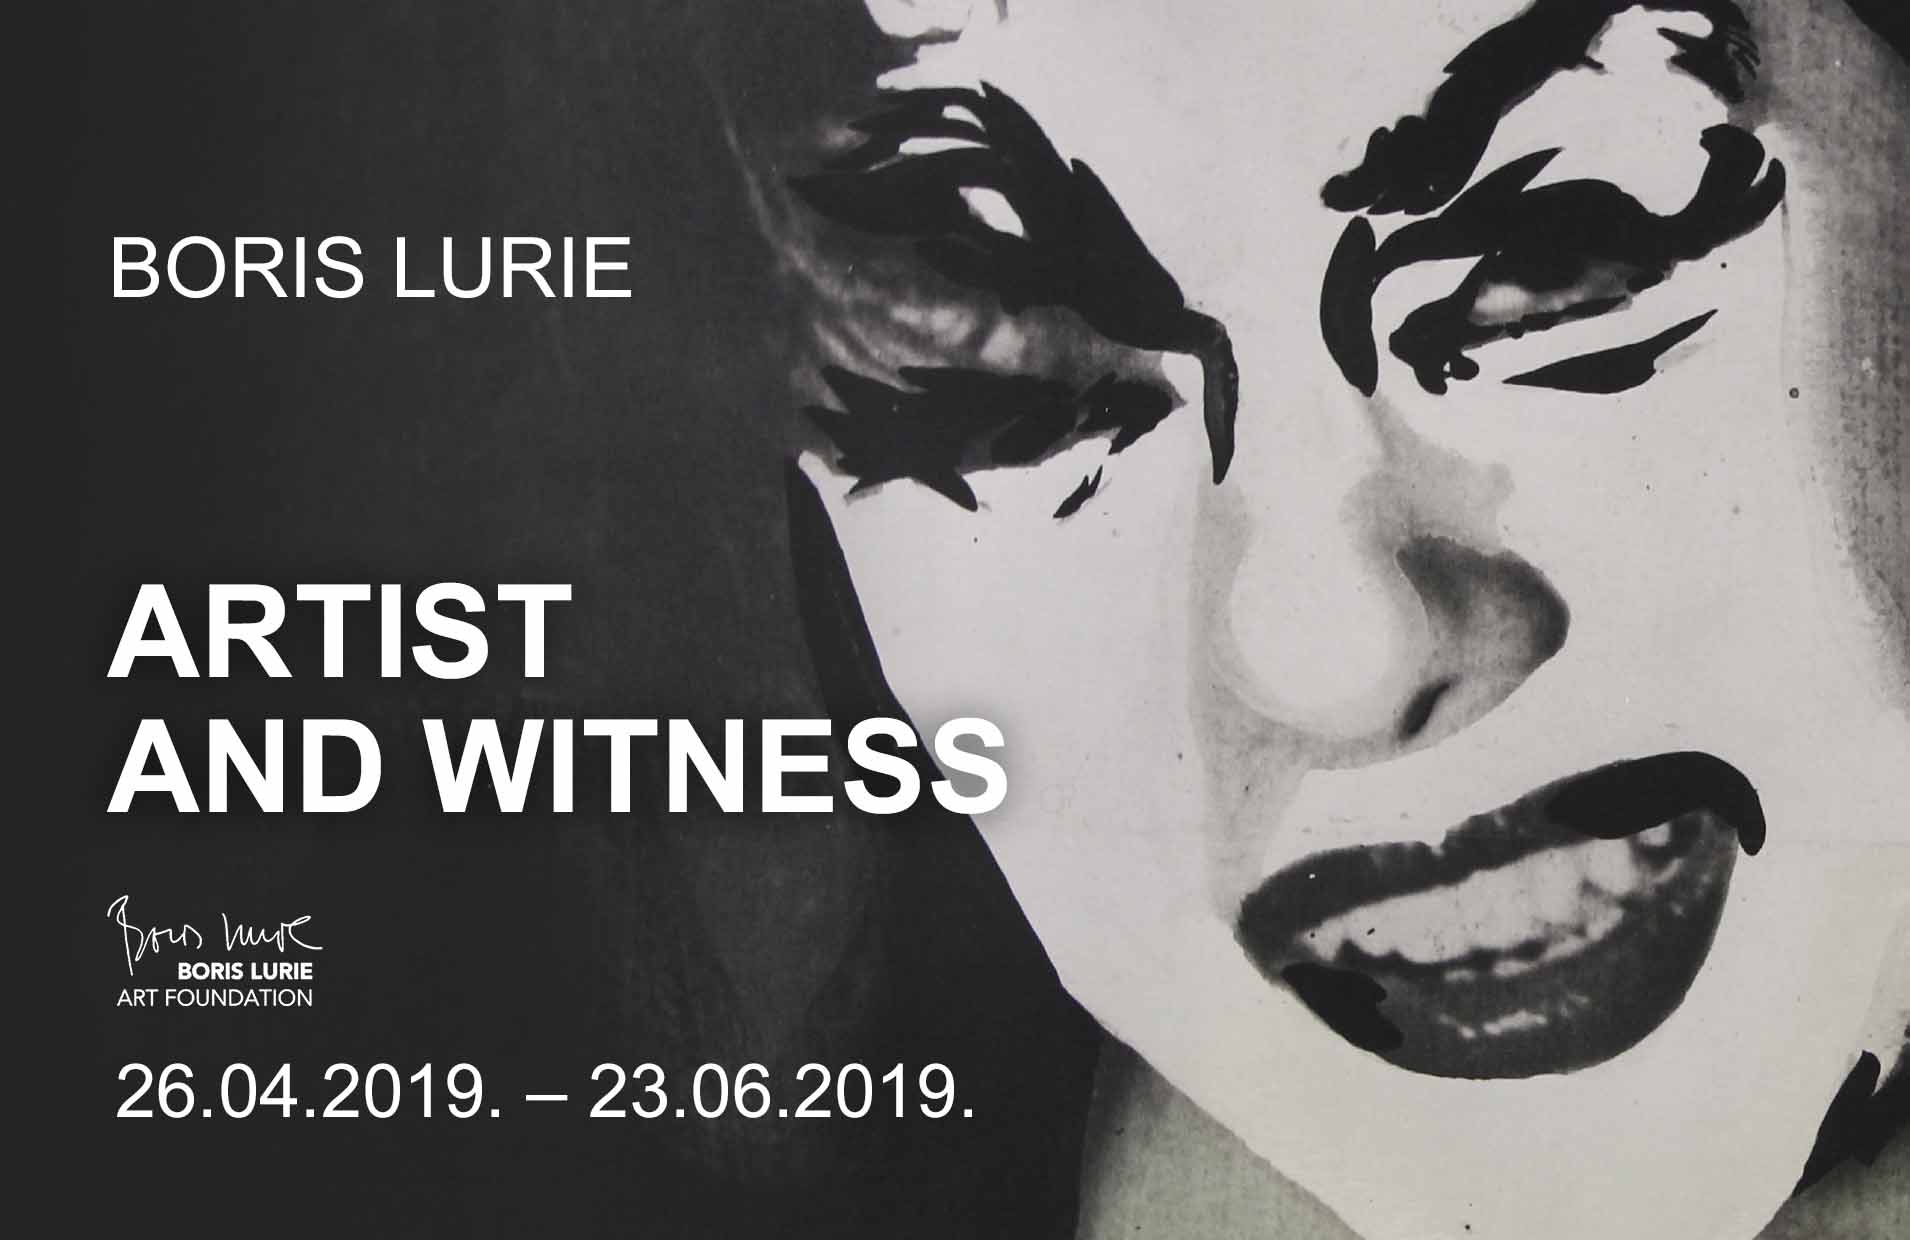 BORIS LURIE “ARTIST AND WITNESS”